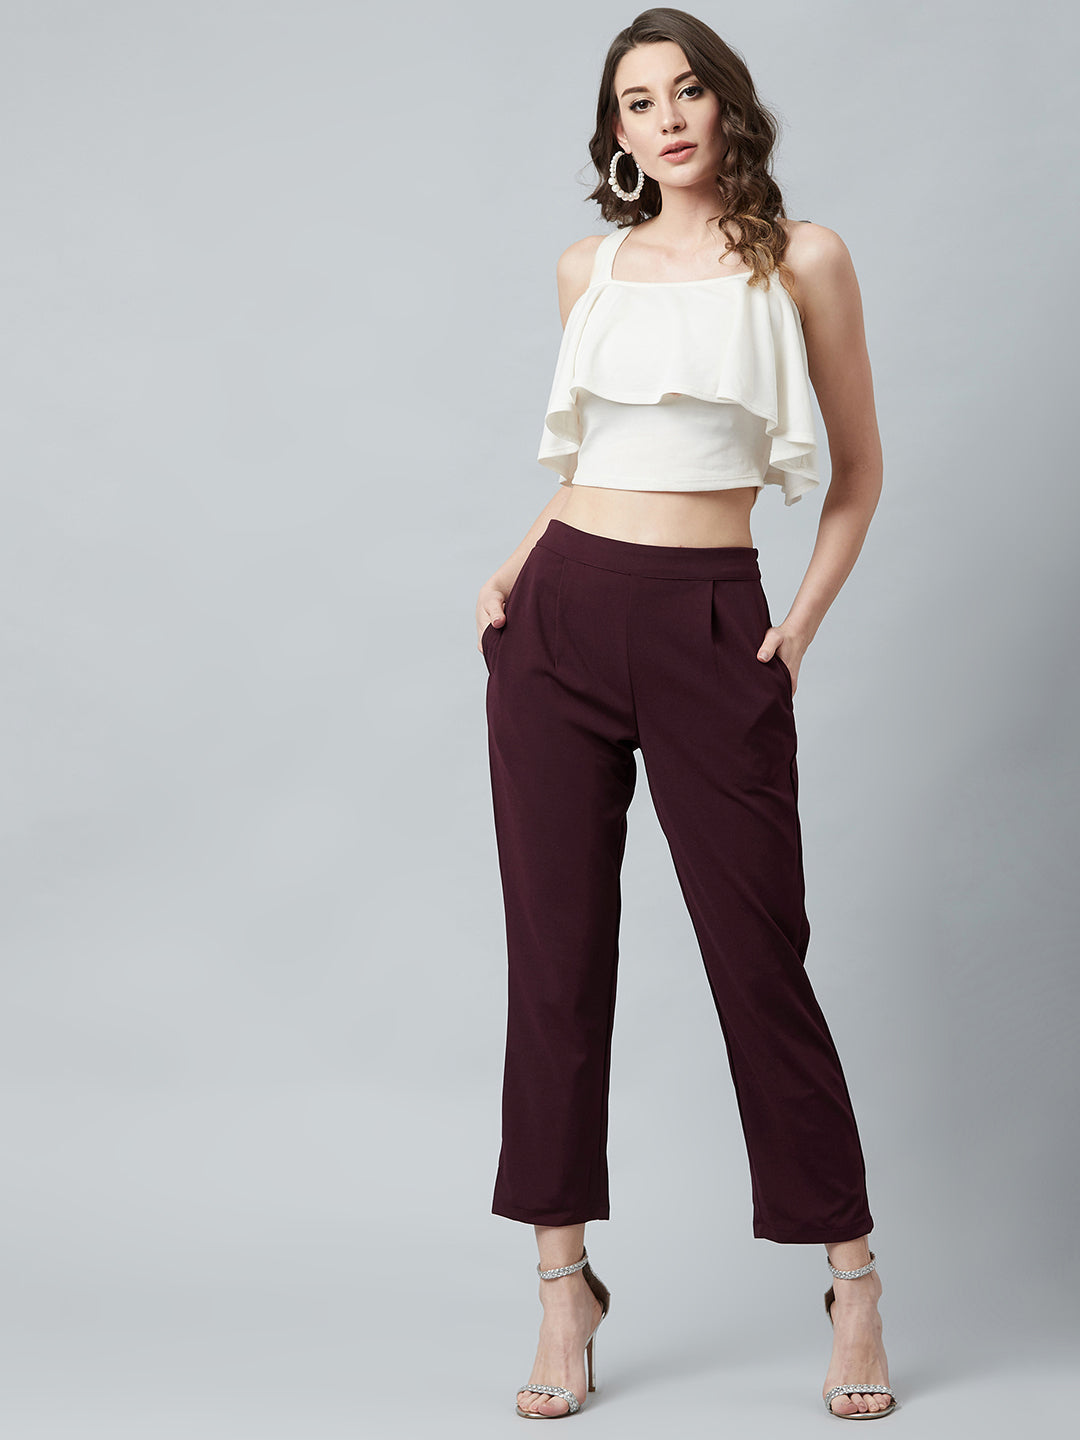 Buy Women Maroon Regular Fit Solid Casual Trousers Online  653934  Allen  Solly